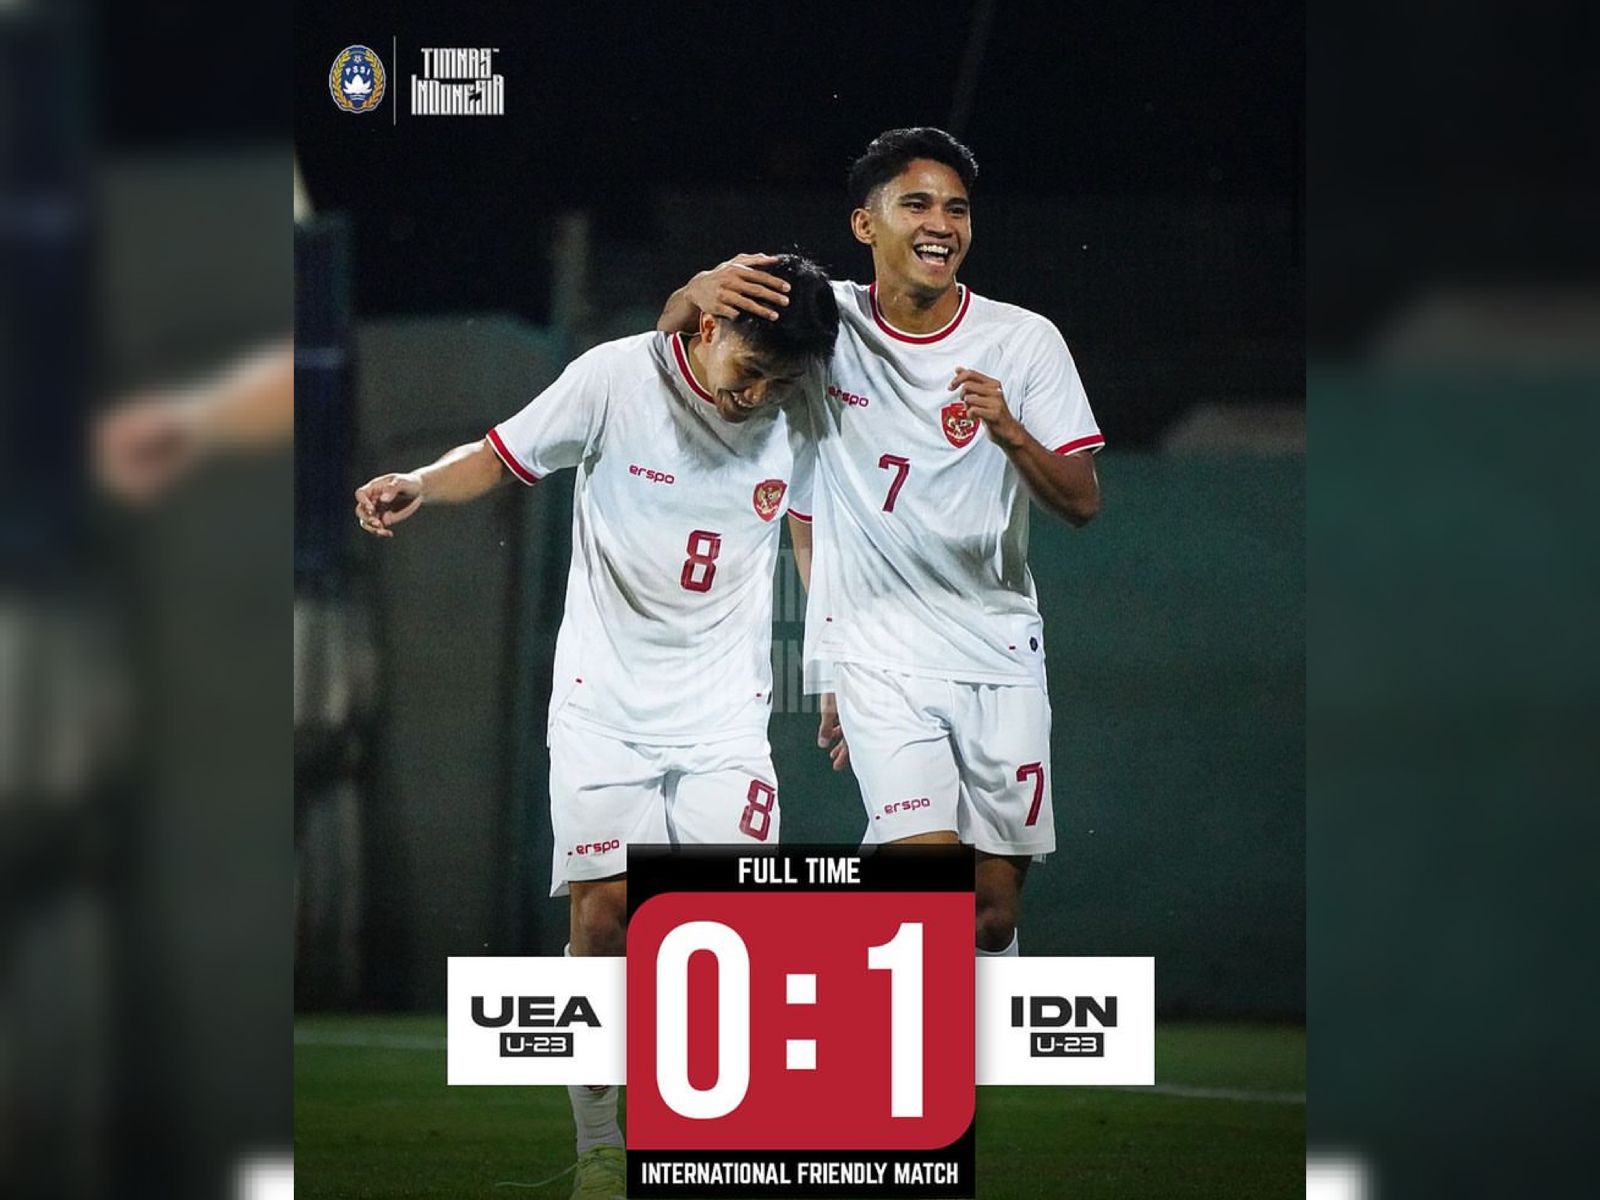 Hasil Laga Uji Coba Timnas Indonesia vs UEA 1-0, Gol Witan Bawa Kemenangan Garuda